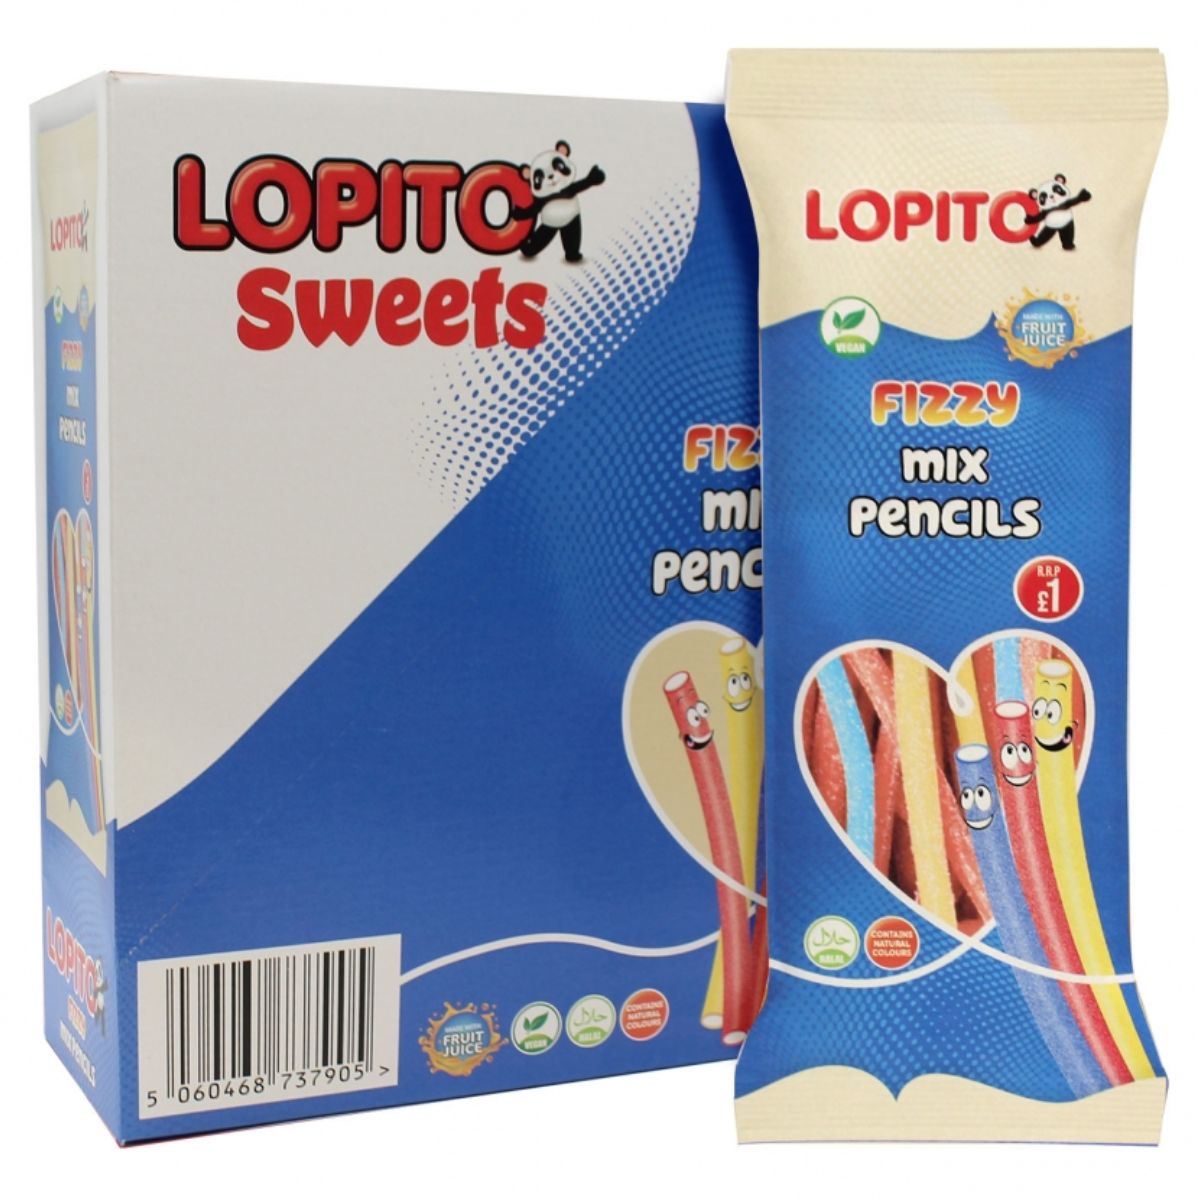 A box of Lopito - Fizzy Mix Pencil - 150g mini pencils.